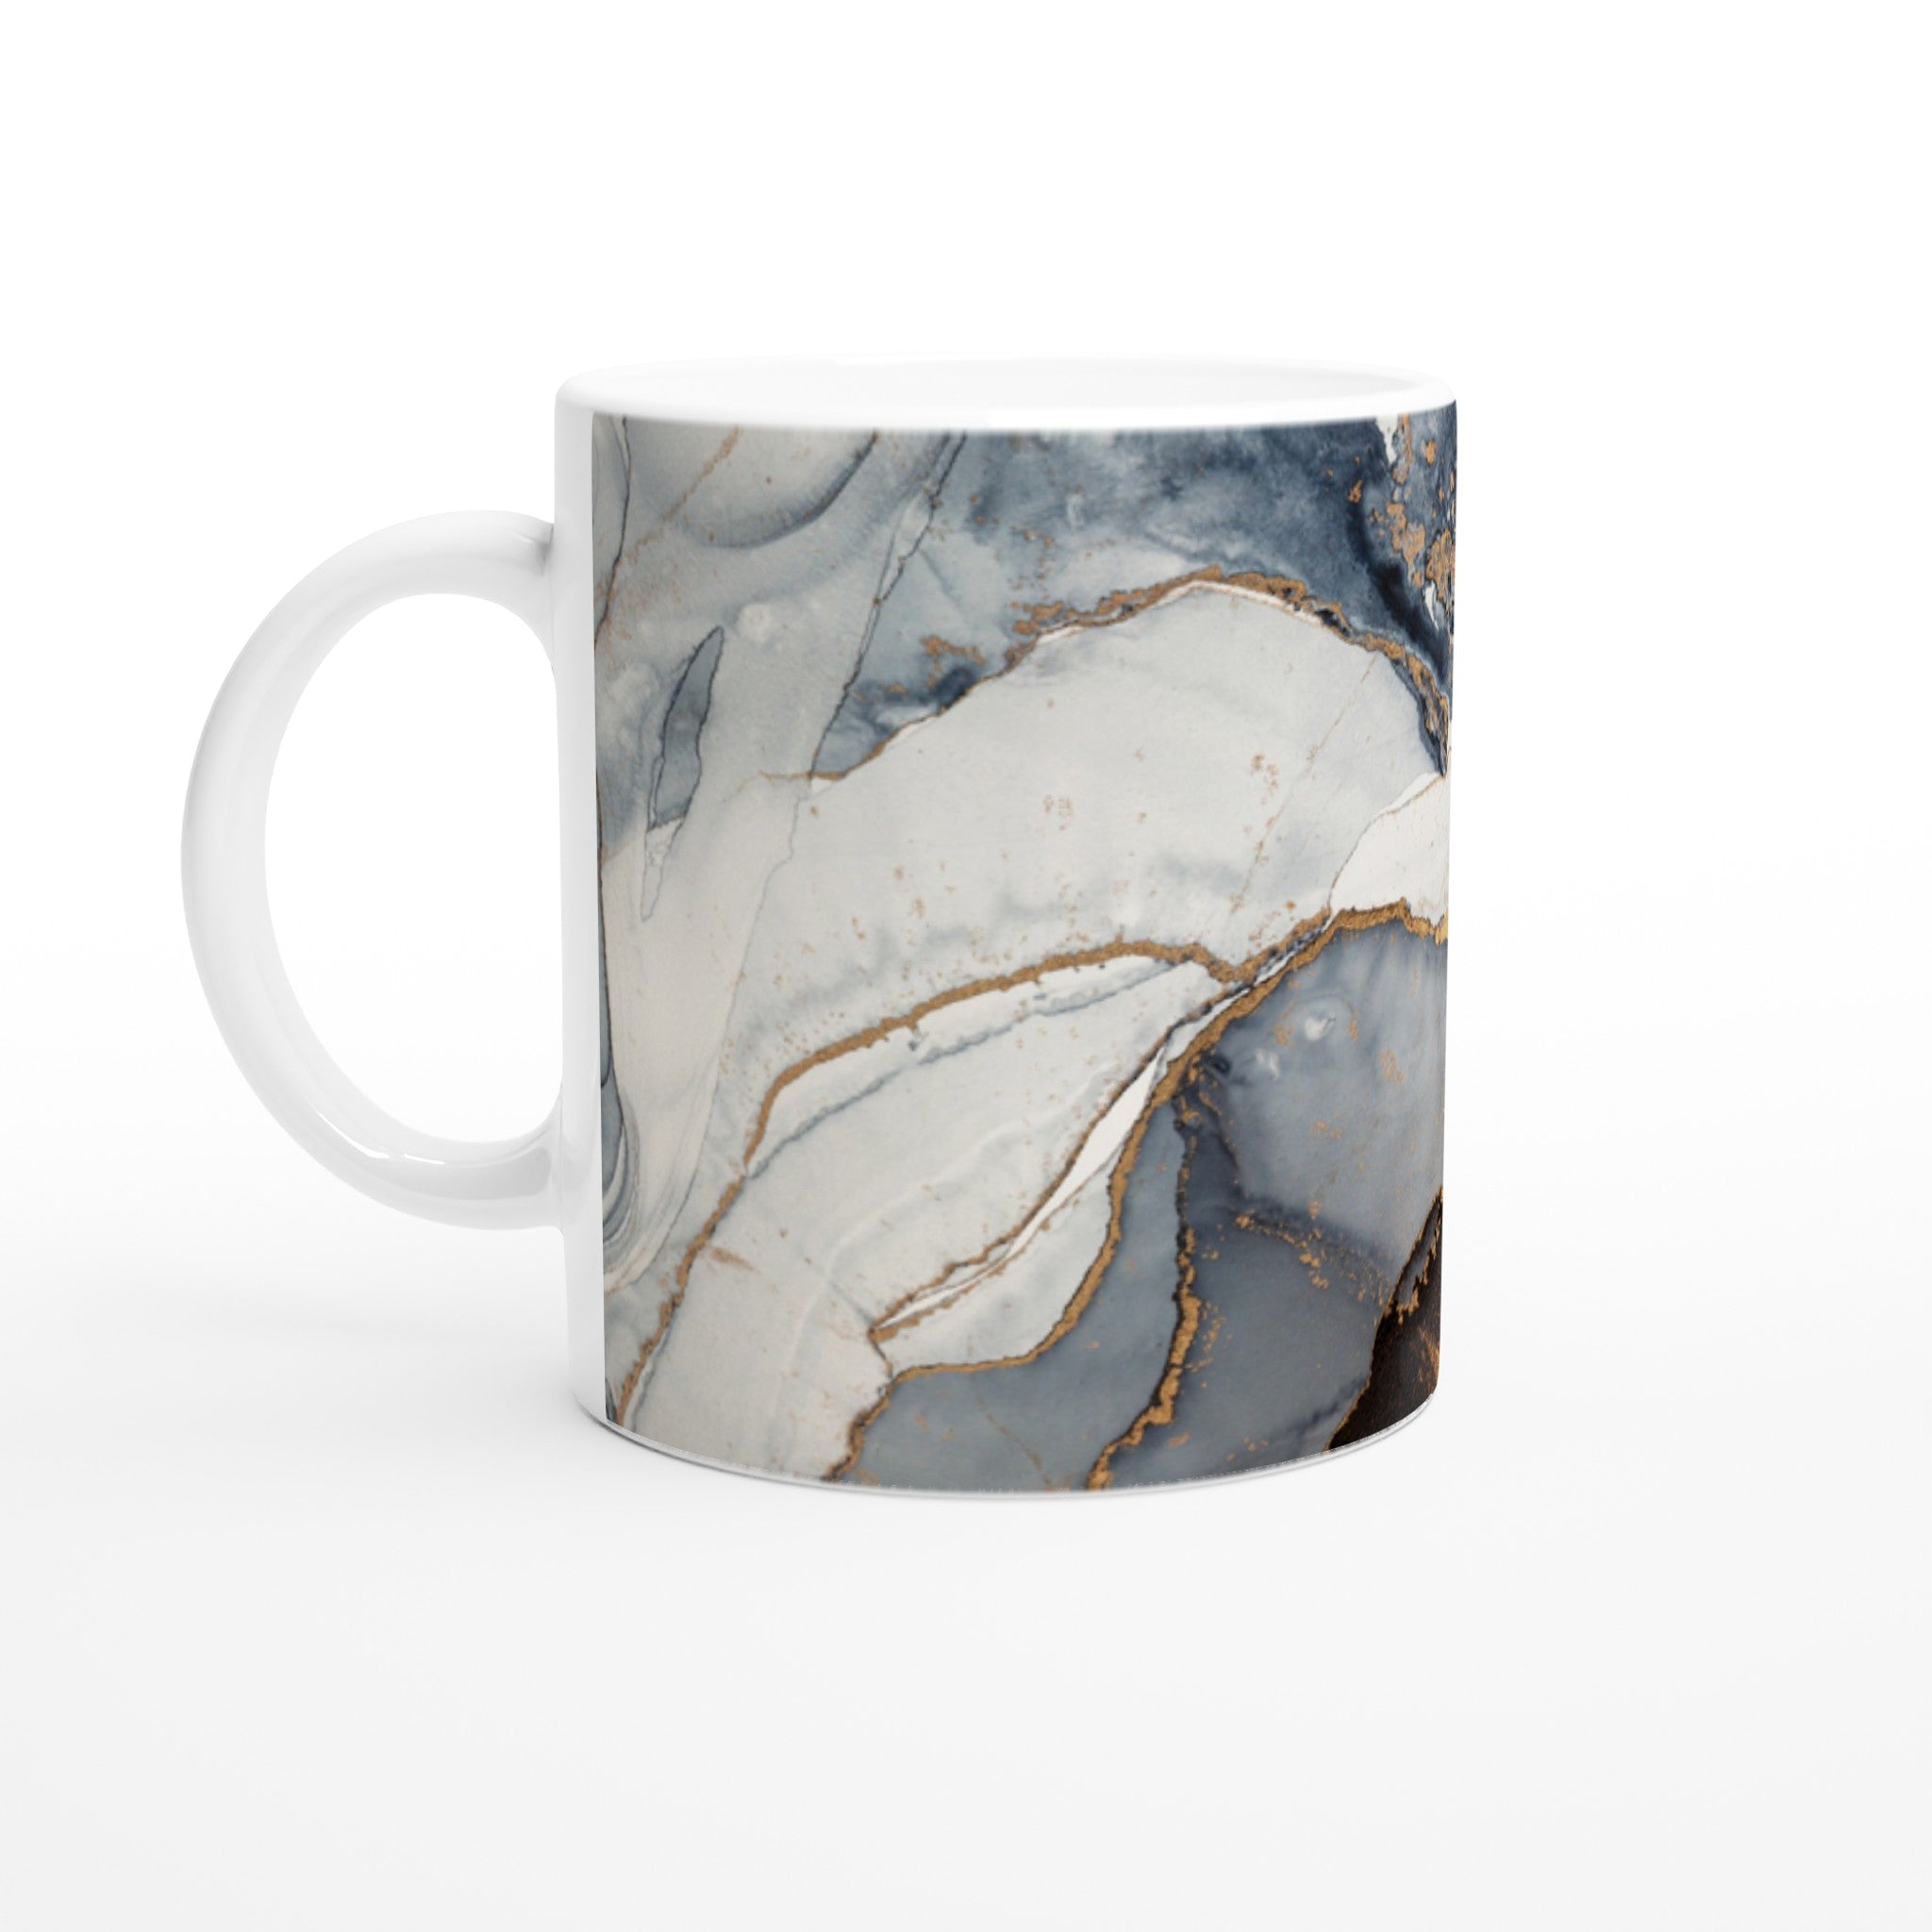 Minimalist Abstract Mug